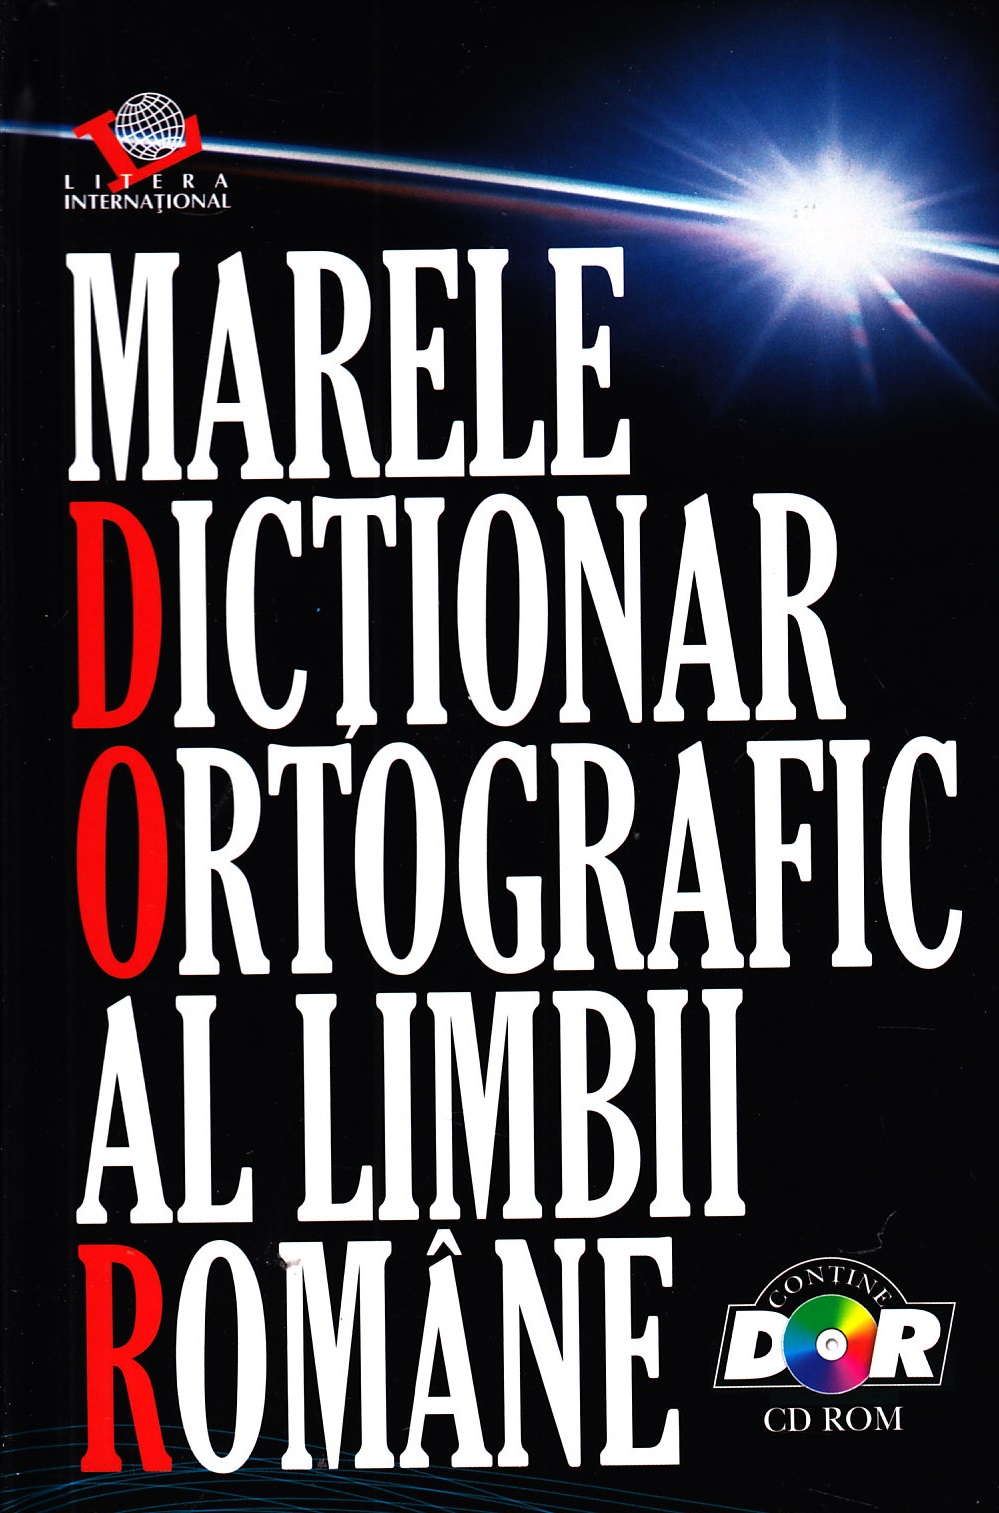 Marele dictionar ortografic al limbii romane - Contine CD-Rom